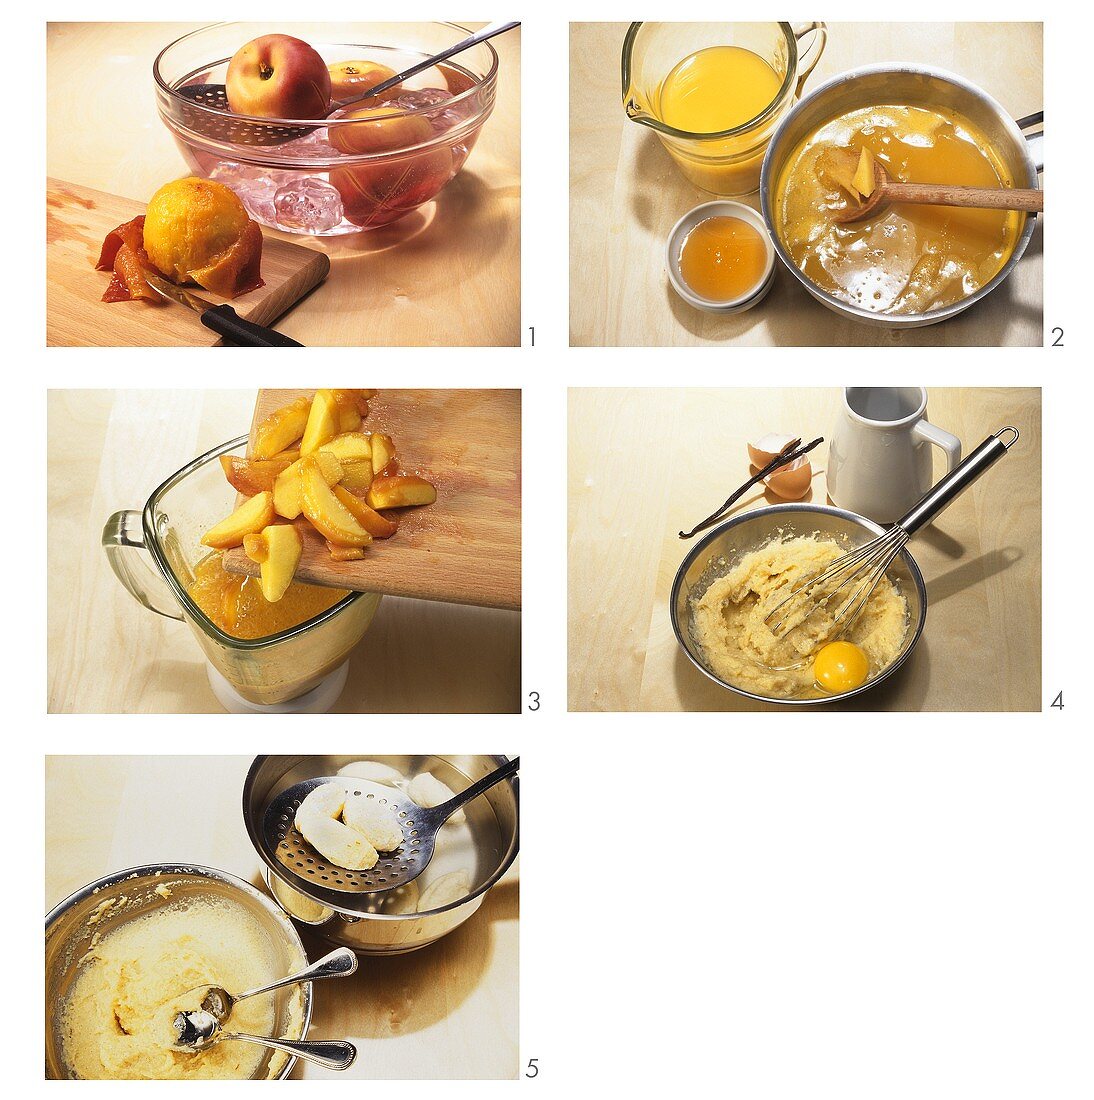 Making cold peach soup with semolina dumplings